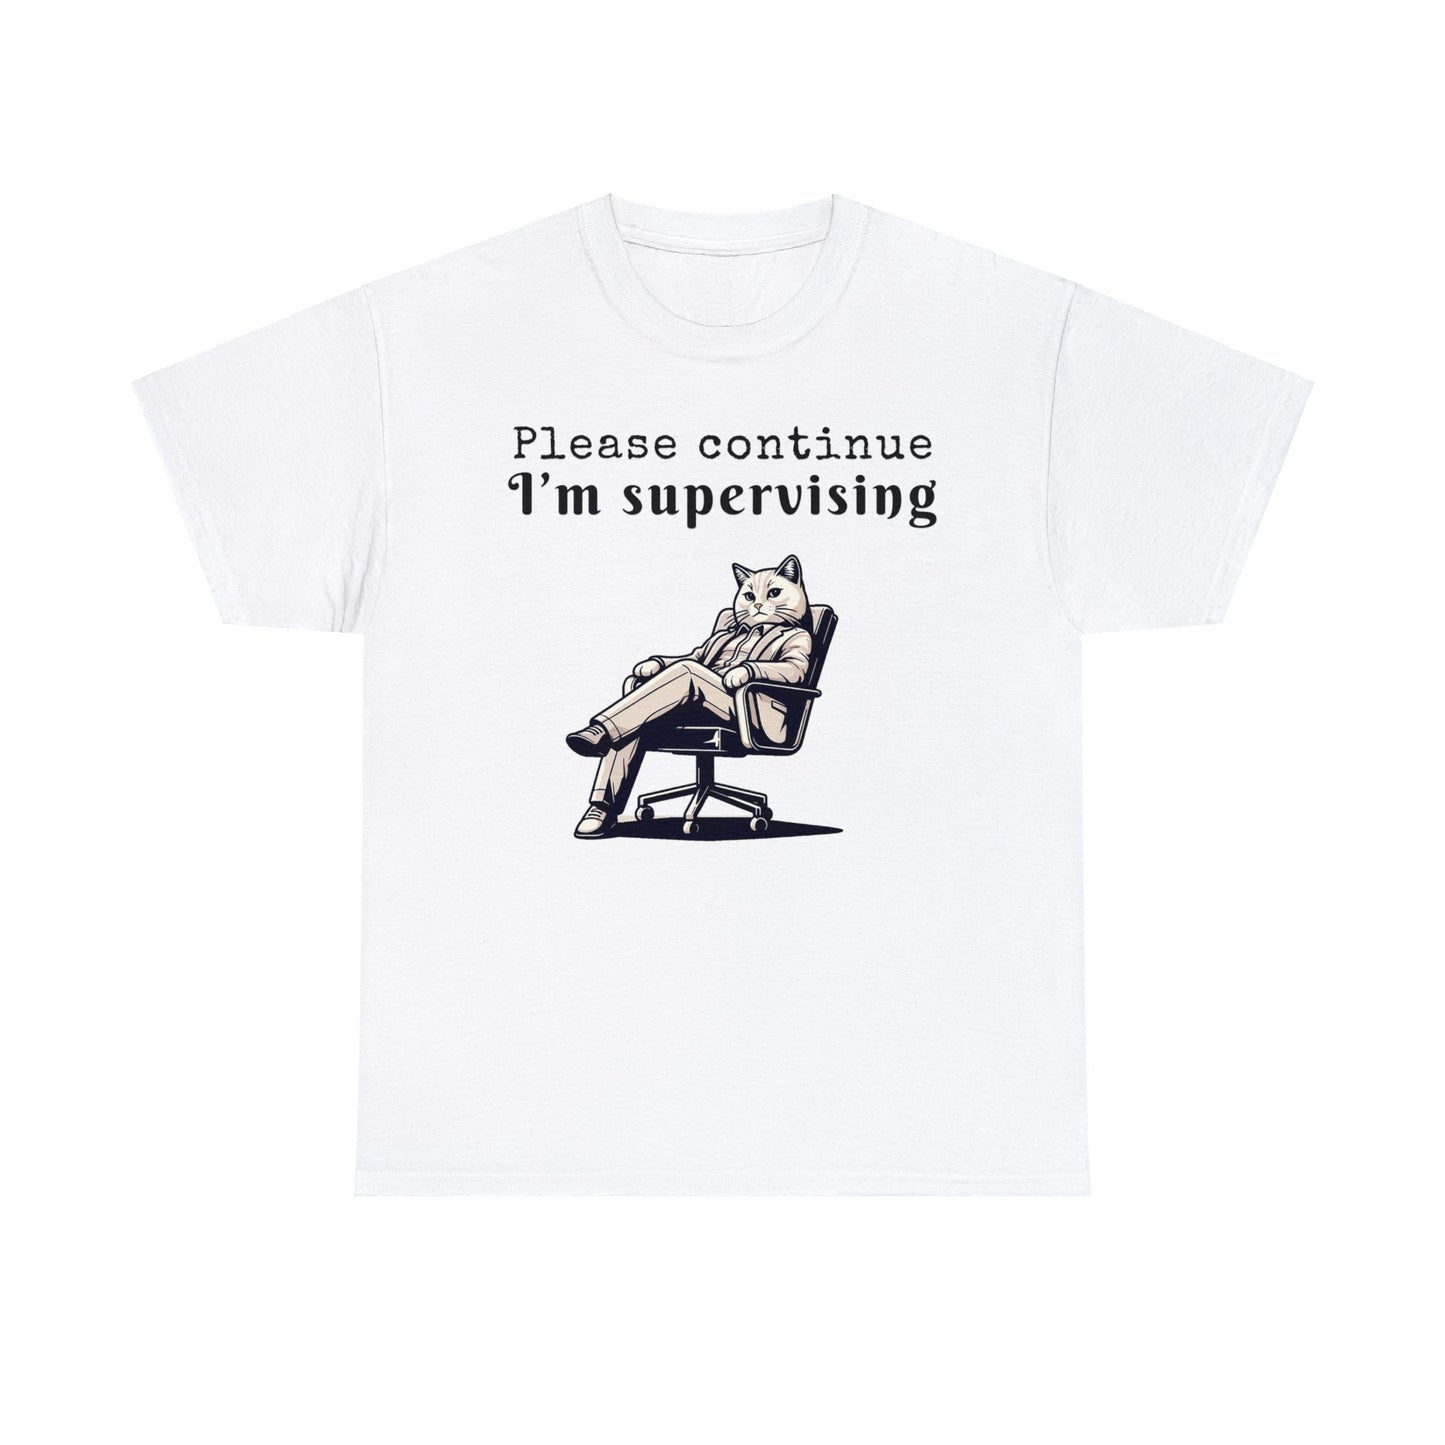 Supervisor cat shirt